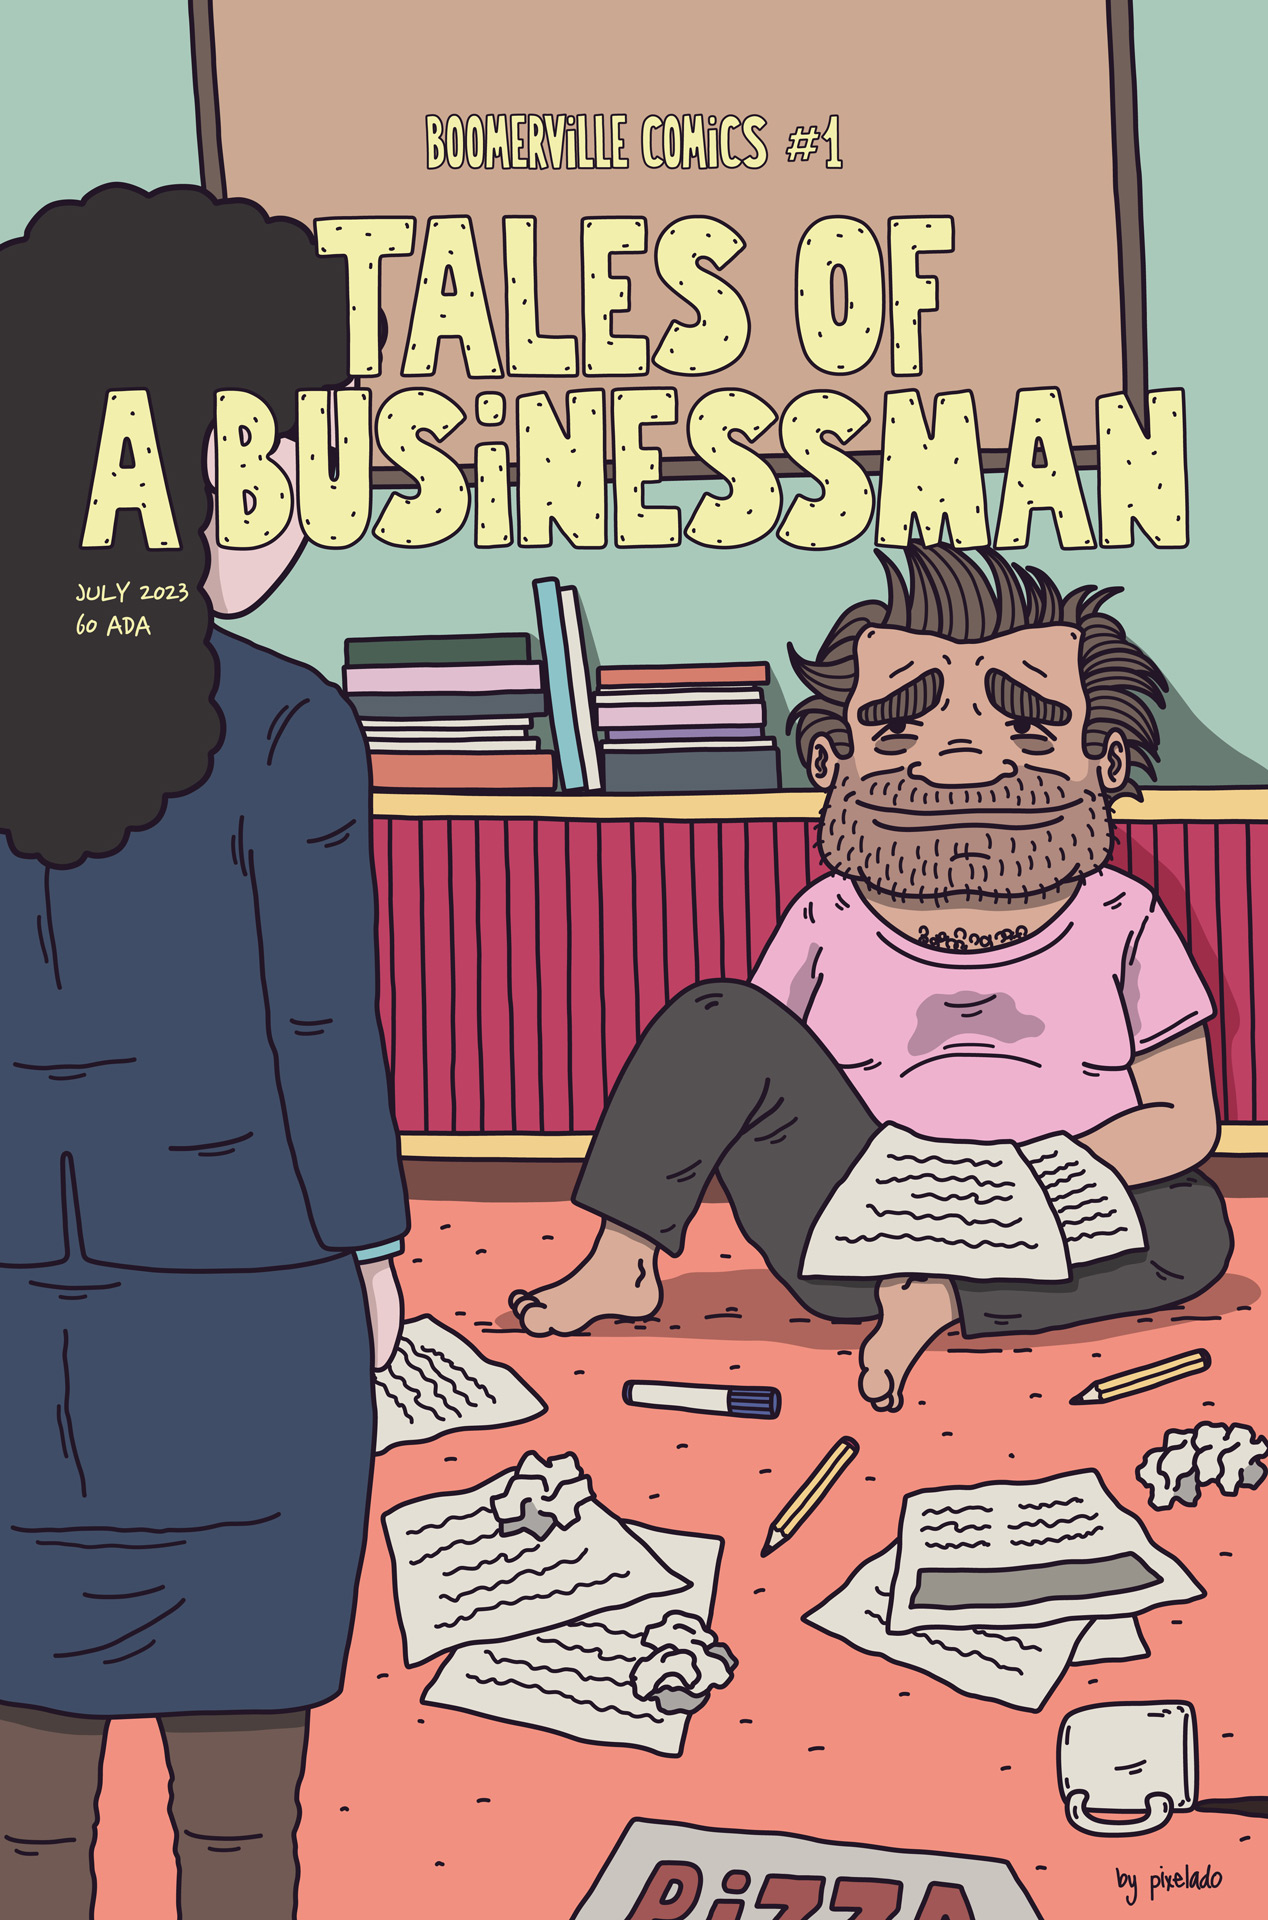 Boomerville Comics #1 Tales of a businessman Cover design